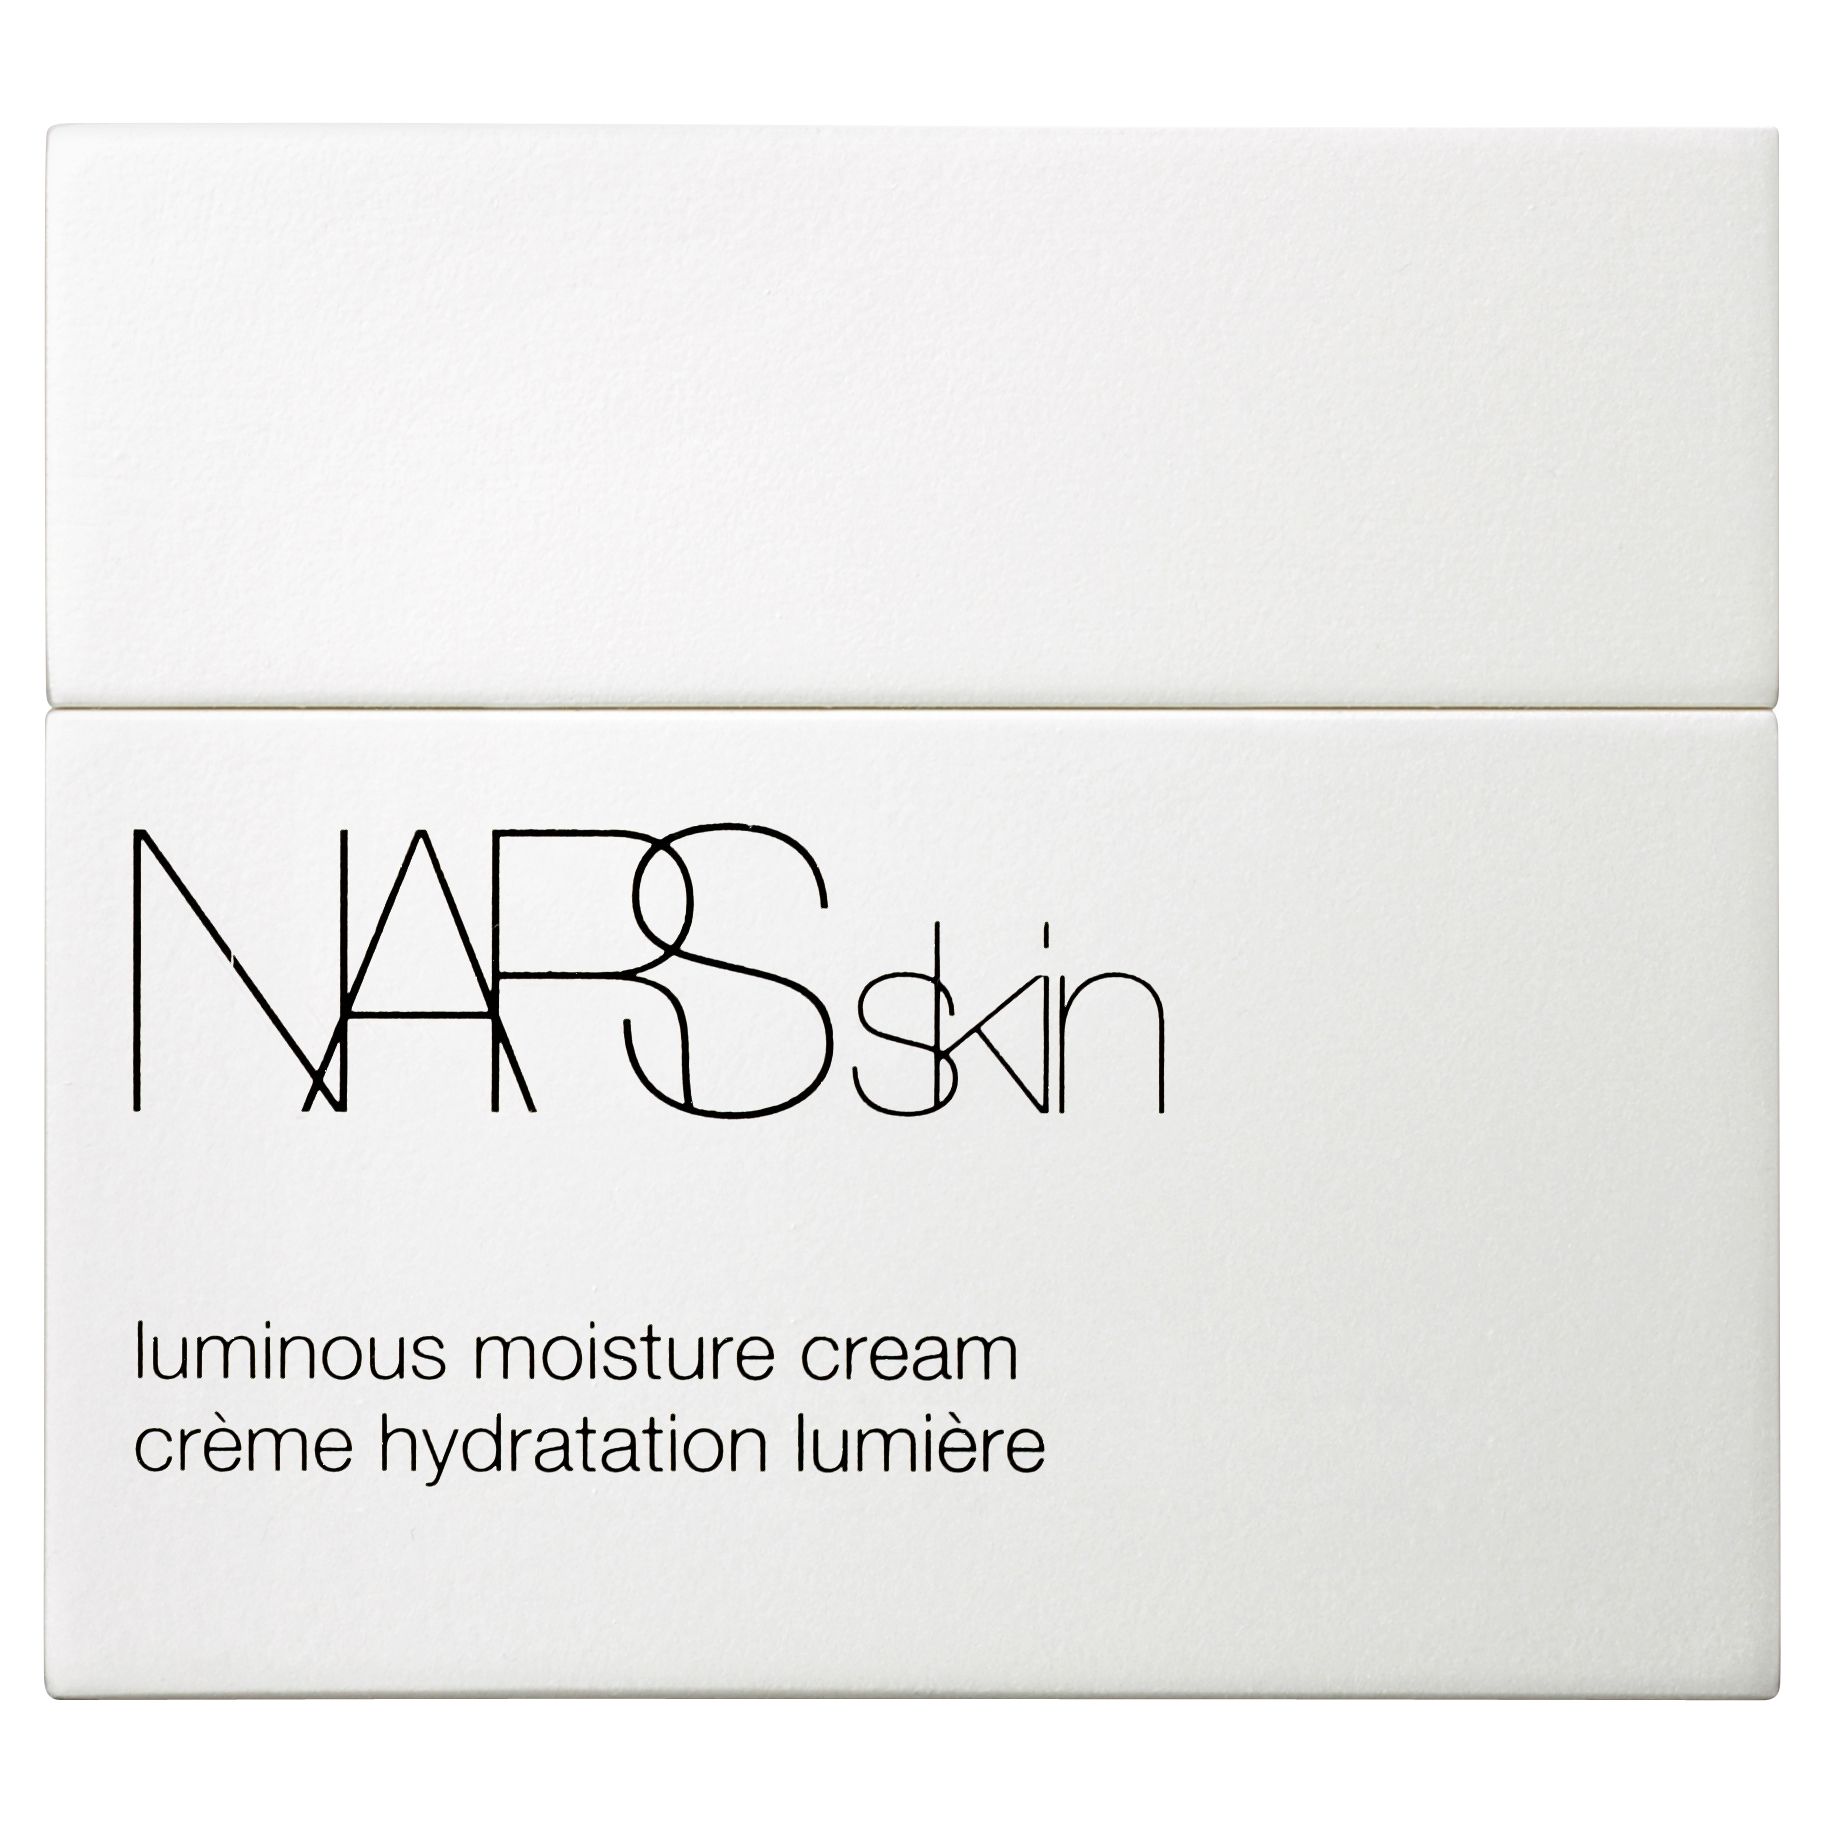 NARSskin Luminous Moisture Cream, 50ml